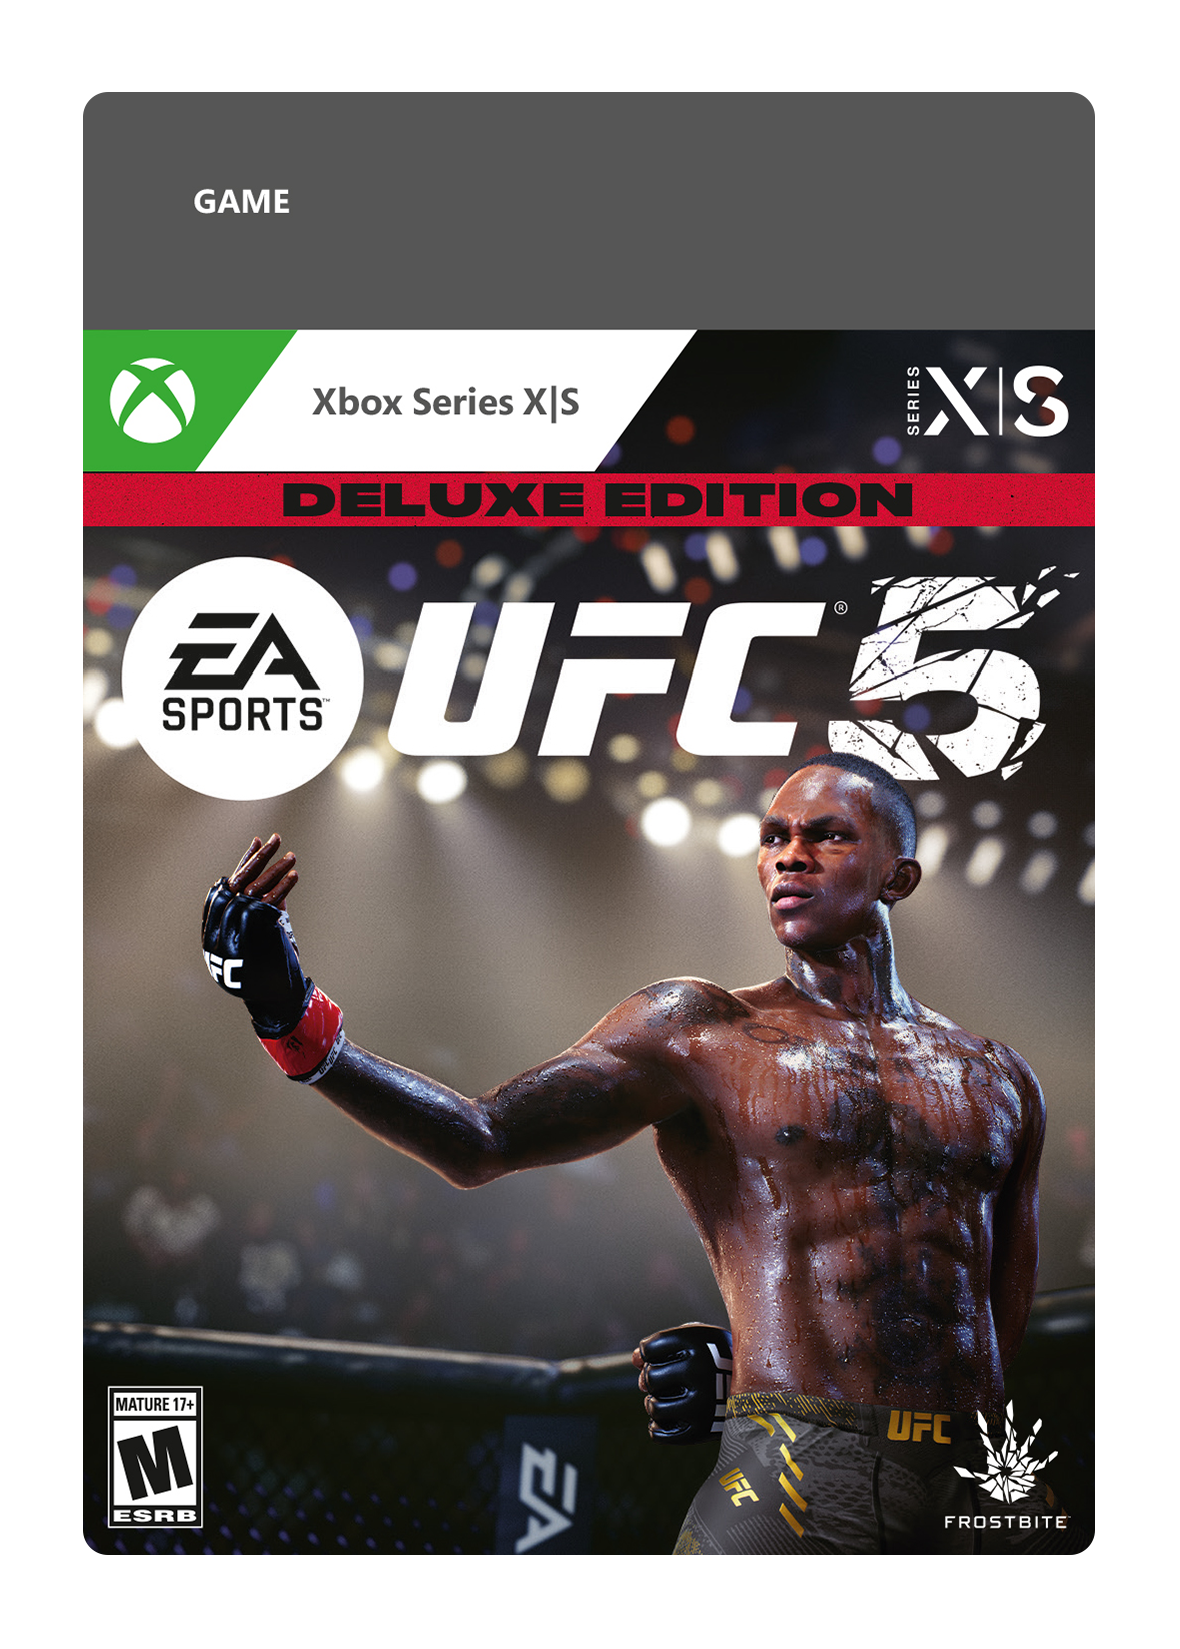 EA Sports UFC 5 PlayStation 5 74486 - Best Buy